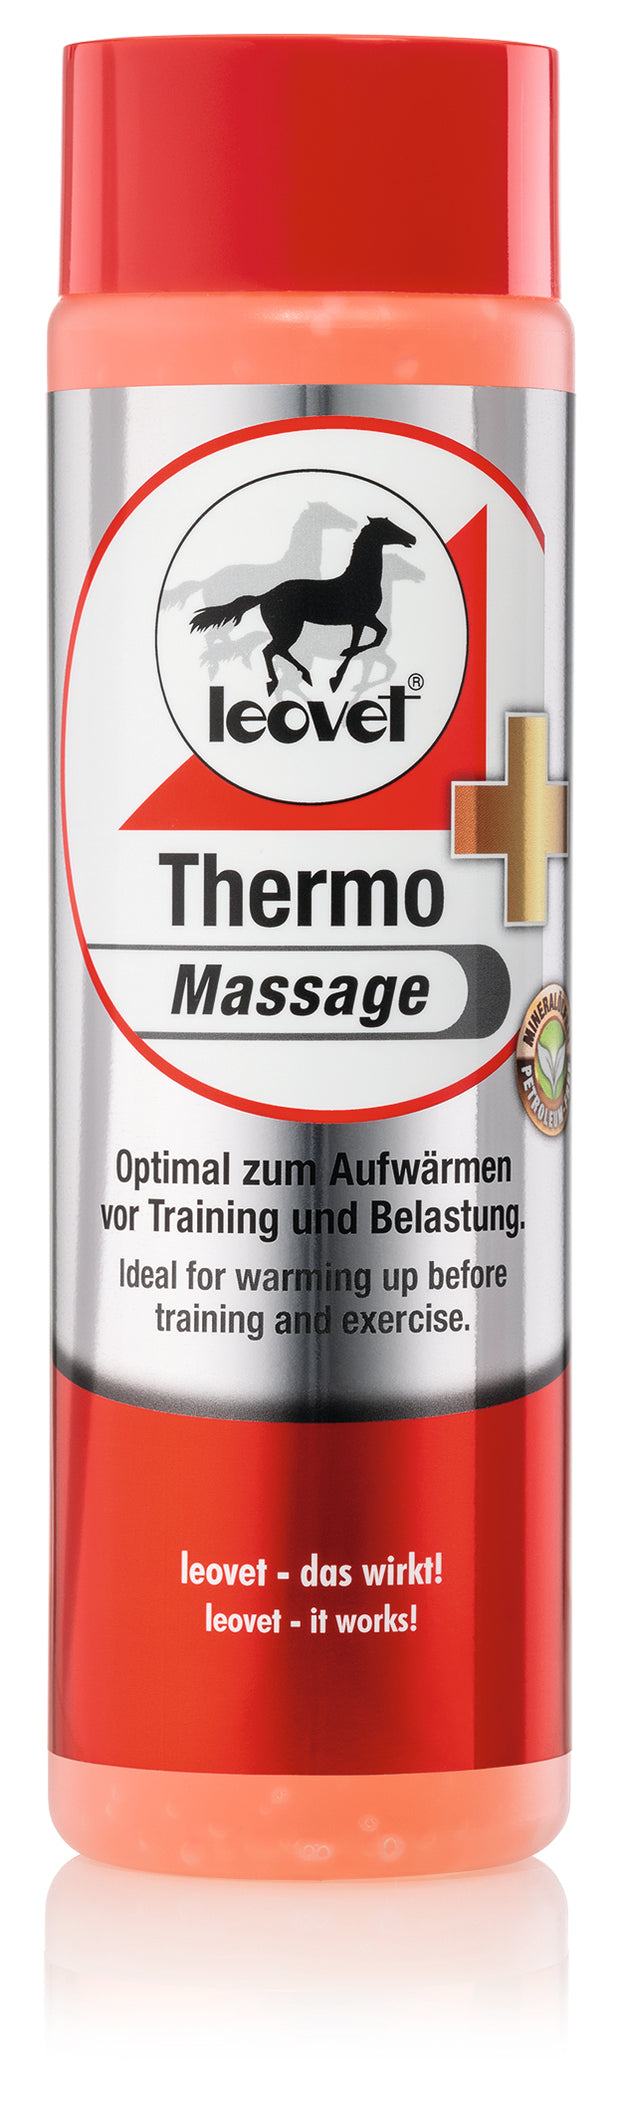 leovet Thermo-Massage